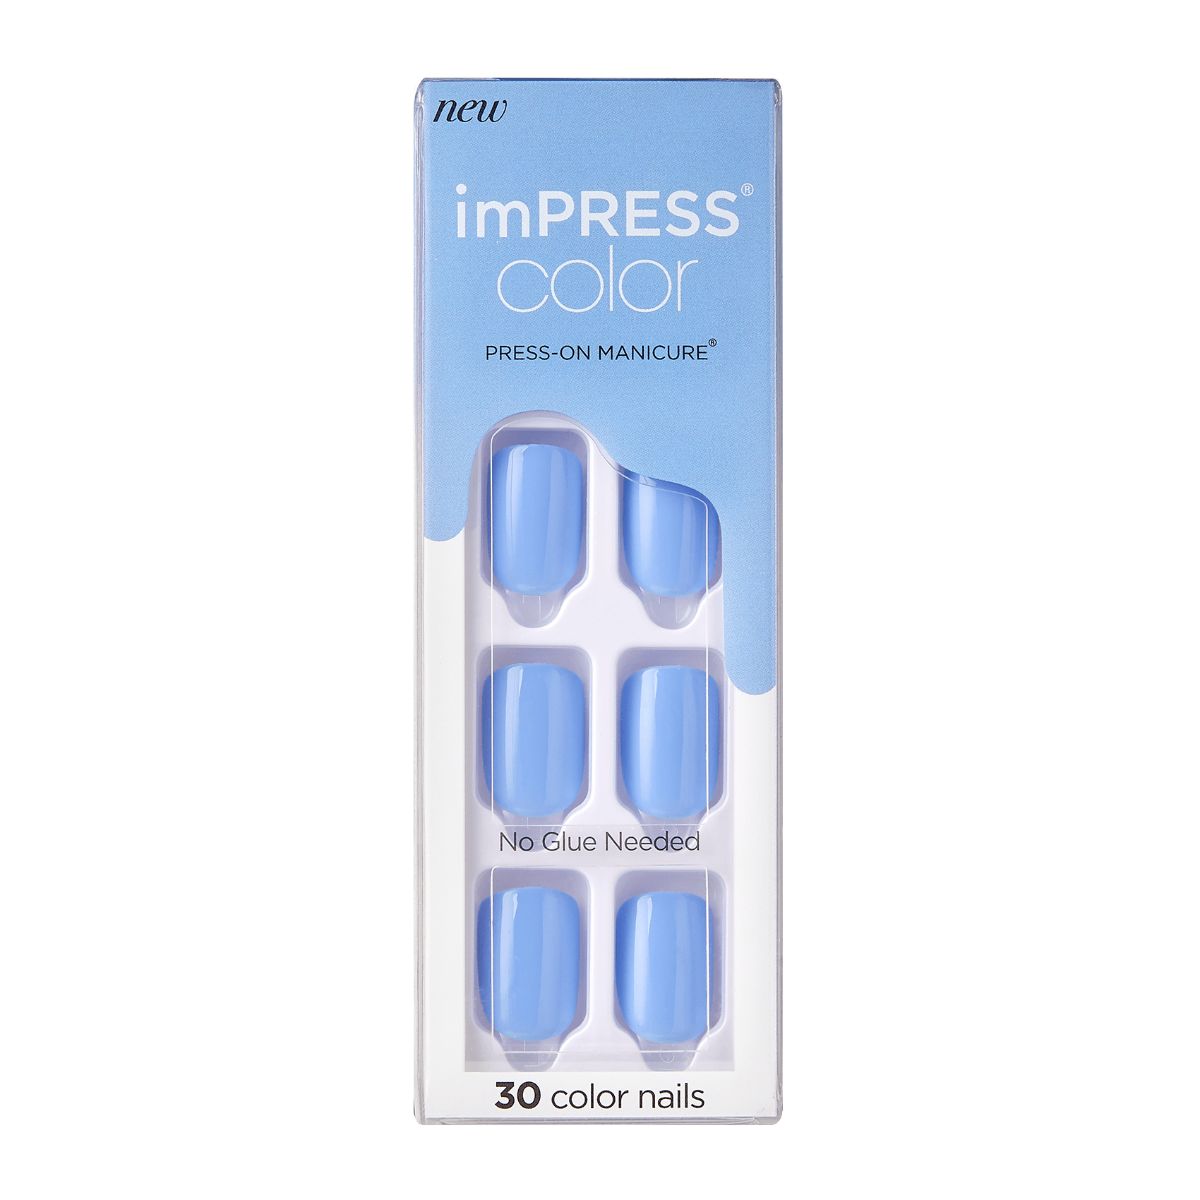 imPRESS Color Press-on Manicure - Baby Why So Blue | KISS, imPRESS, JOAH